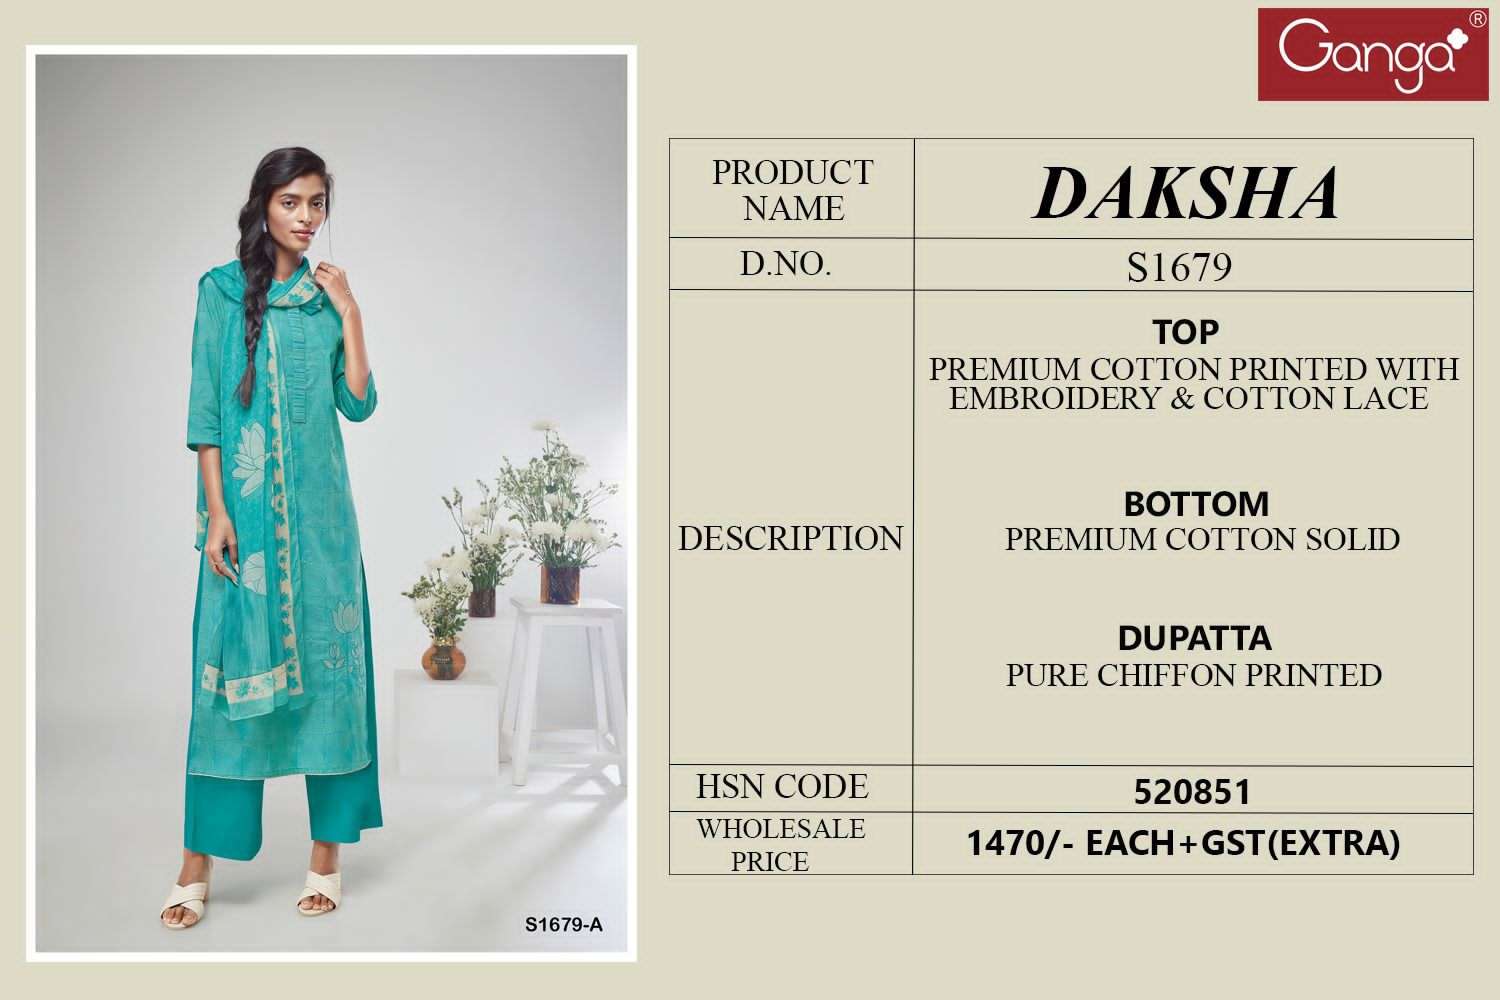 ganga daksha 1679 series premium cotton designer salwar kameez catalogue online market surat